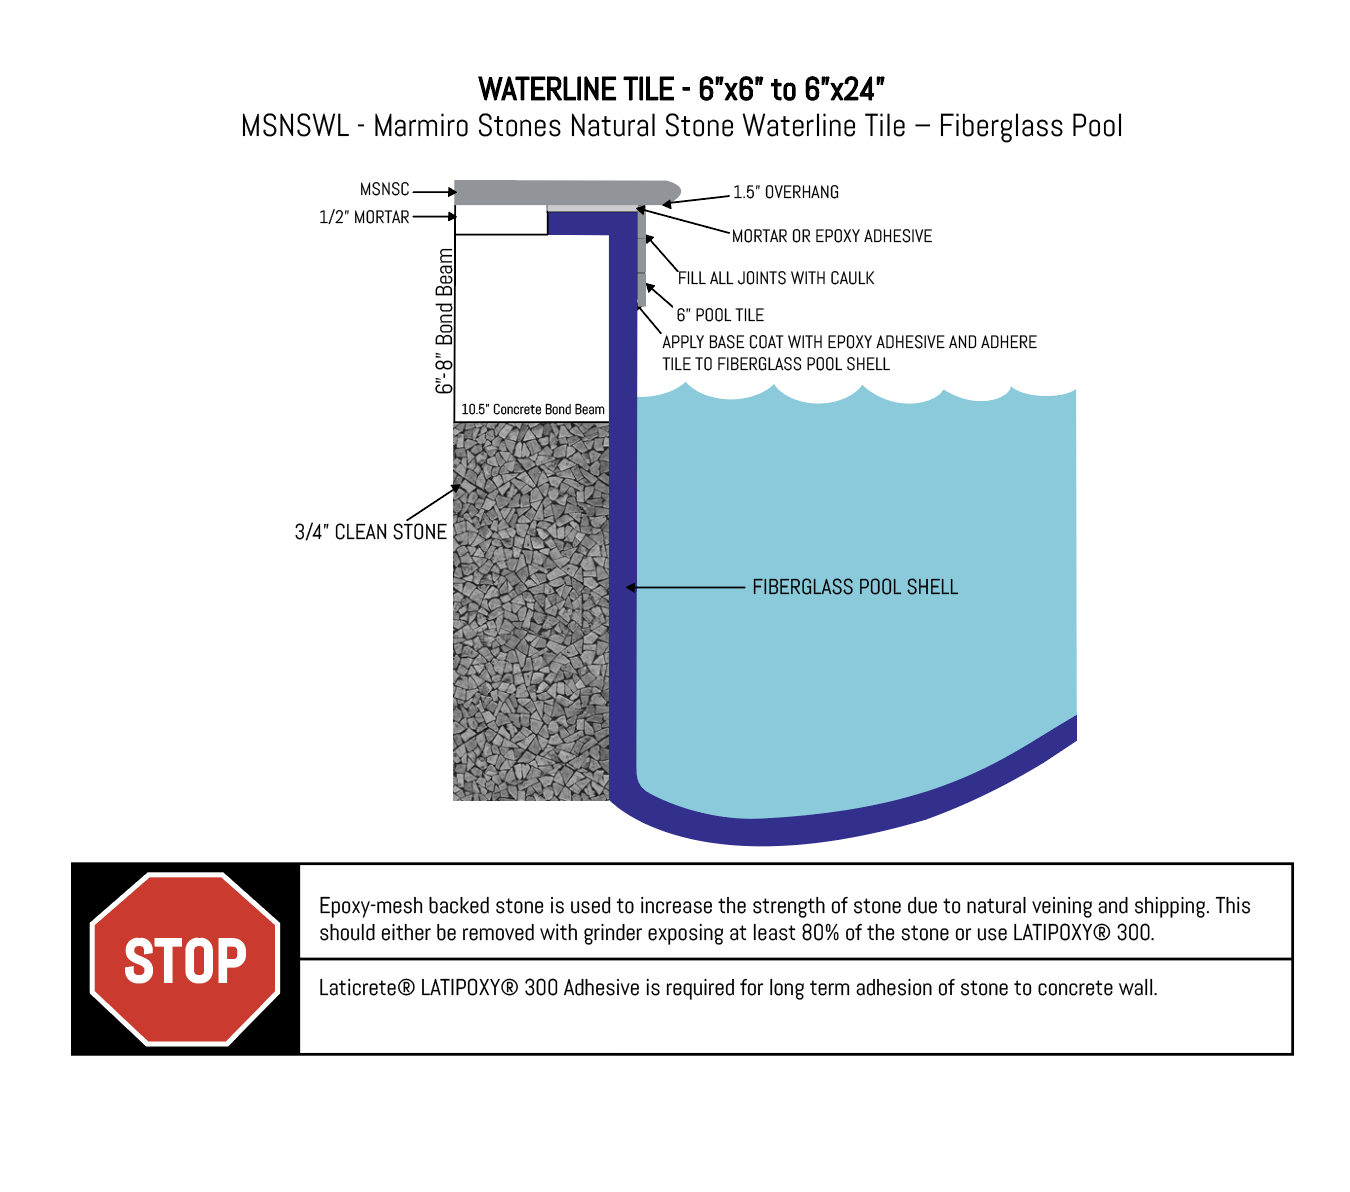 Waterline Tile - Fiberglass Pool